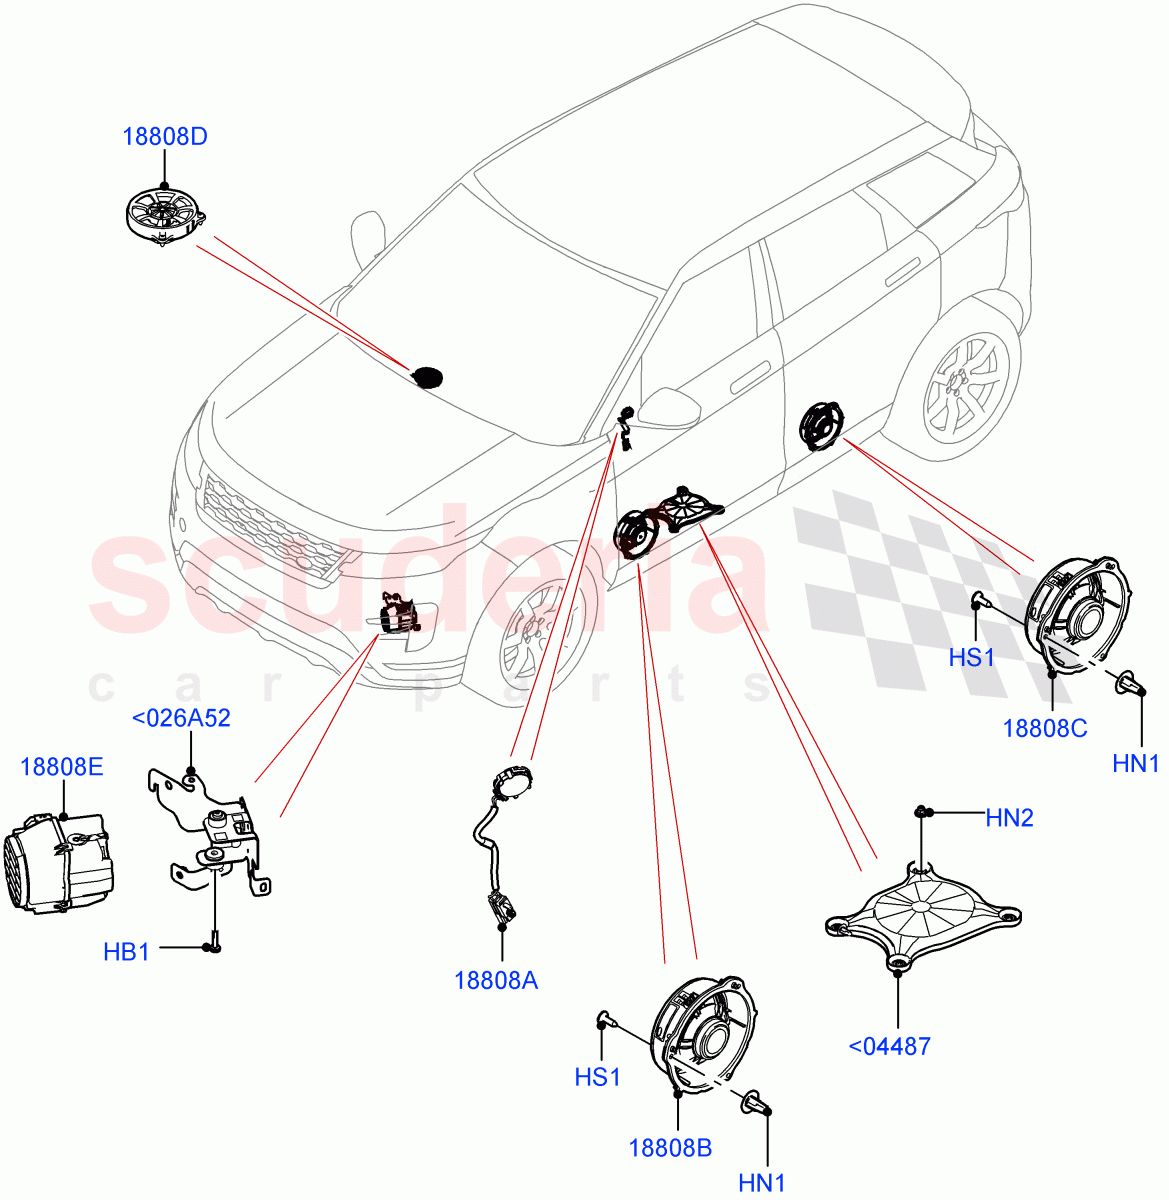 Speakers(Changsu (China),Standard Audio (Base)) of Land Rover Land Rover Range Rover Evoque (2019+) [2.0 Turbo Diesel AJ21D4]